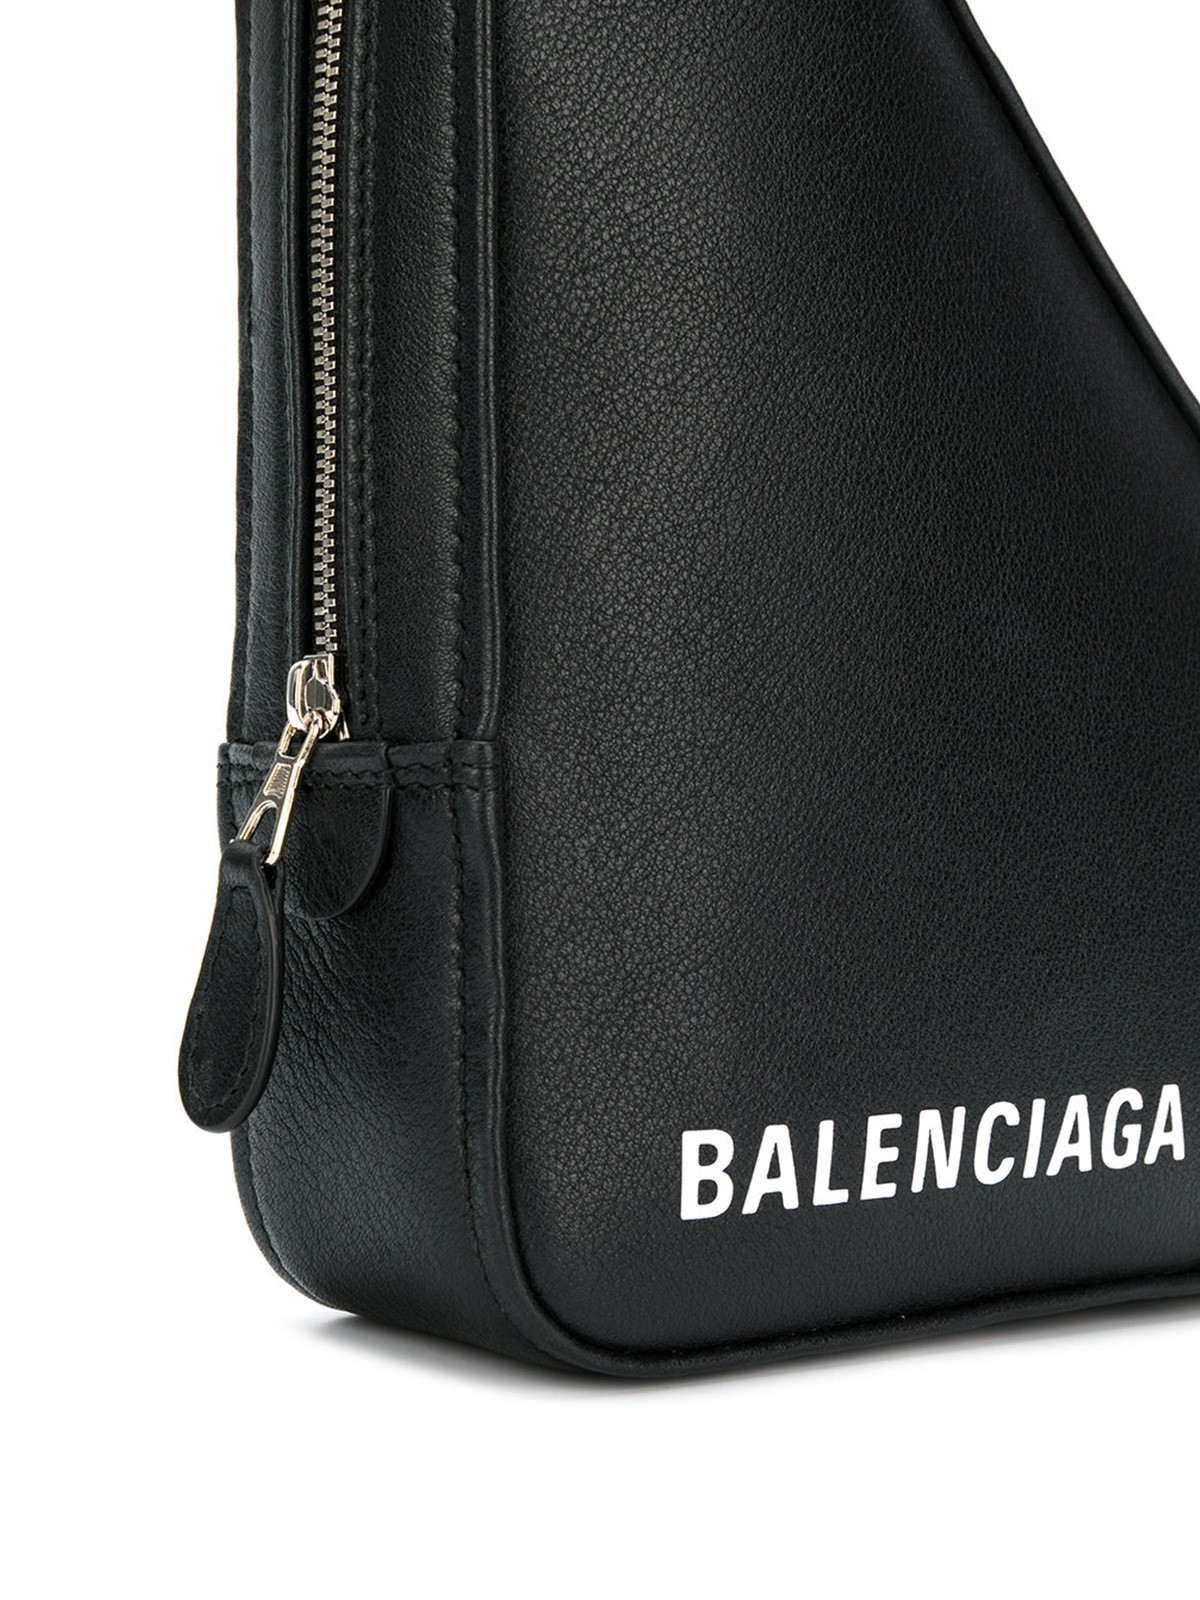 balenciaga TRIANGLE CLUTCH BAG available on montiboutique.com - 23257